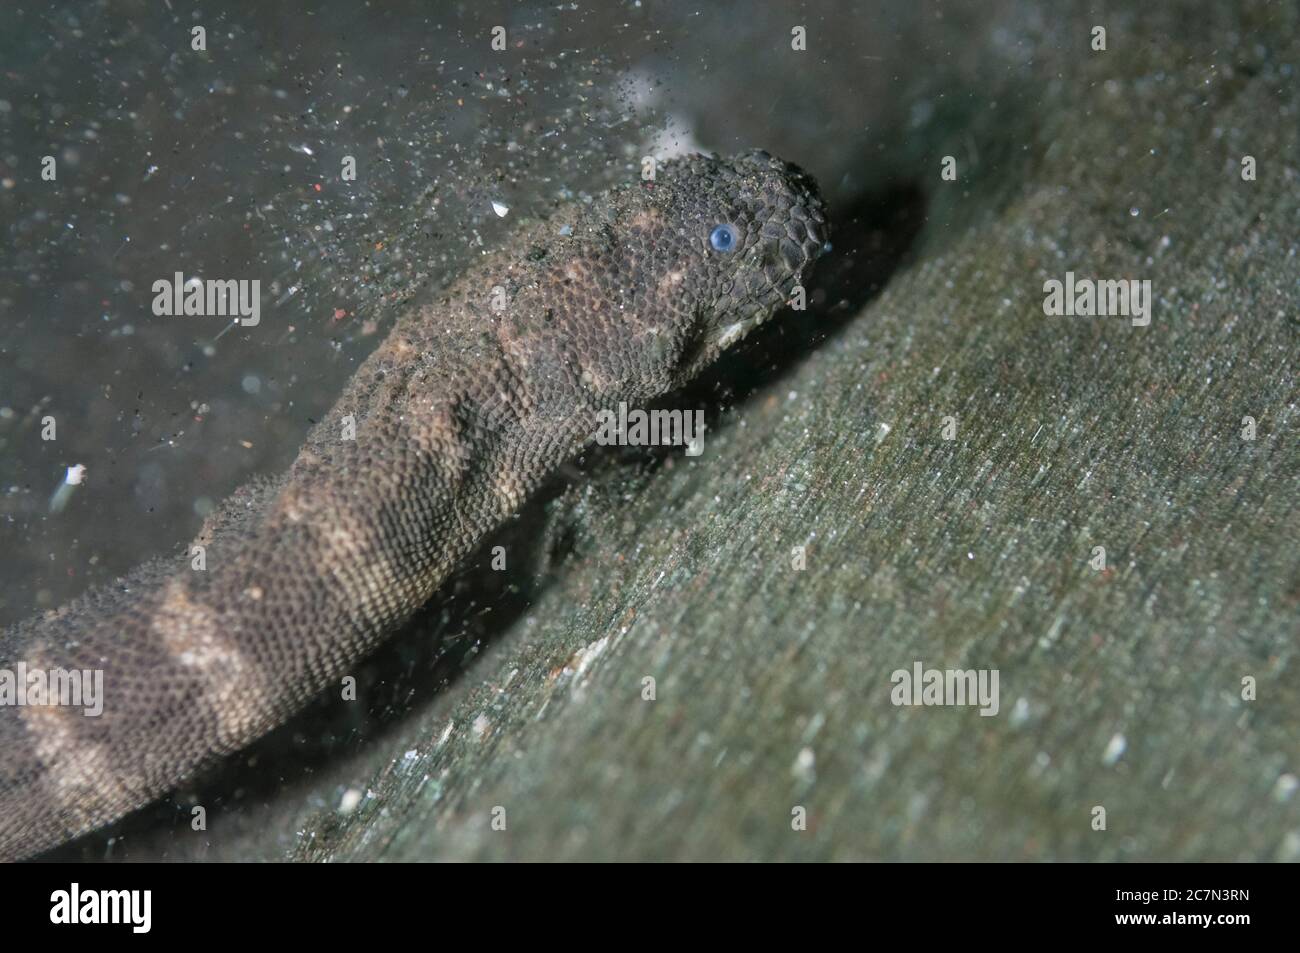 Marine File Snake, Acrochordus granulatus, on black sand, night dive, Bethlehem dive site, Poopoh, Manado, Sulawesi, Indonesia, Pacific Ocean Stock Photo